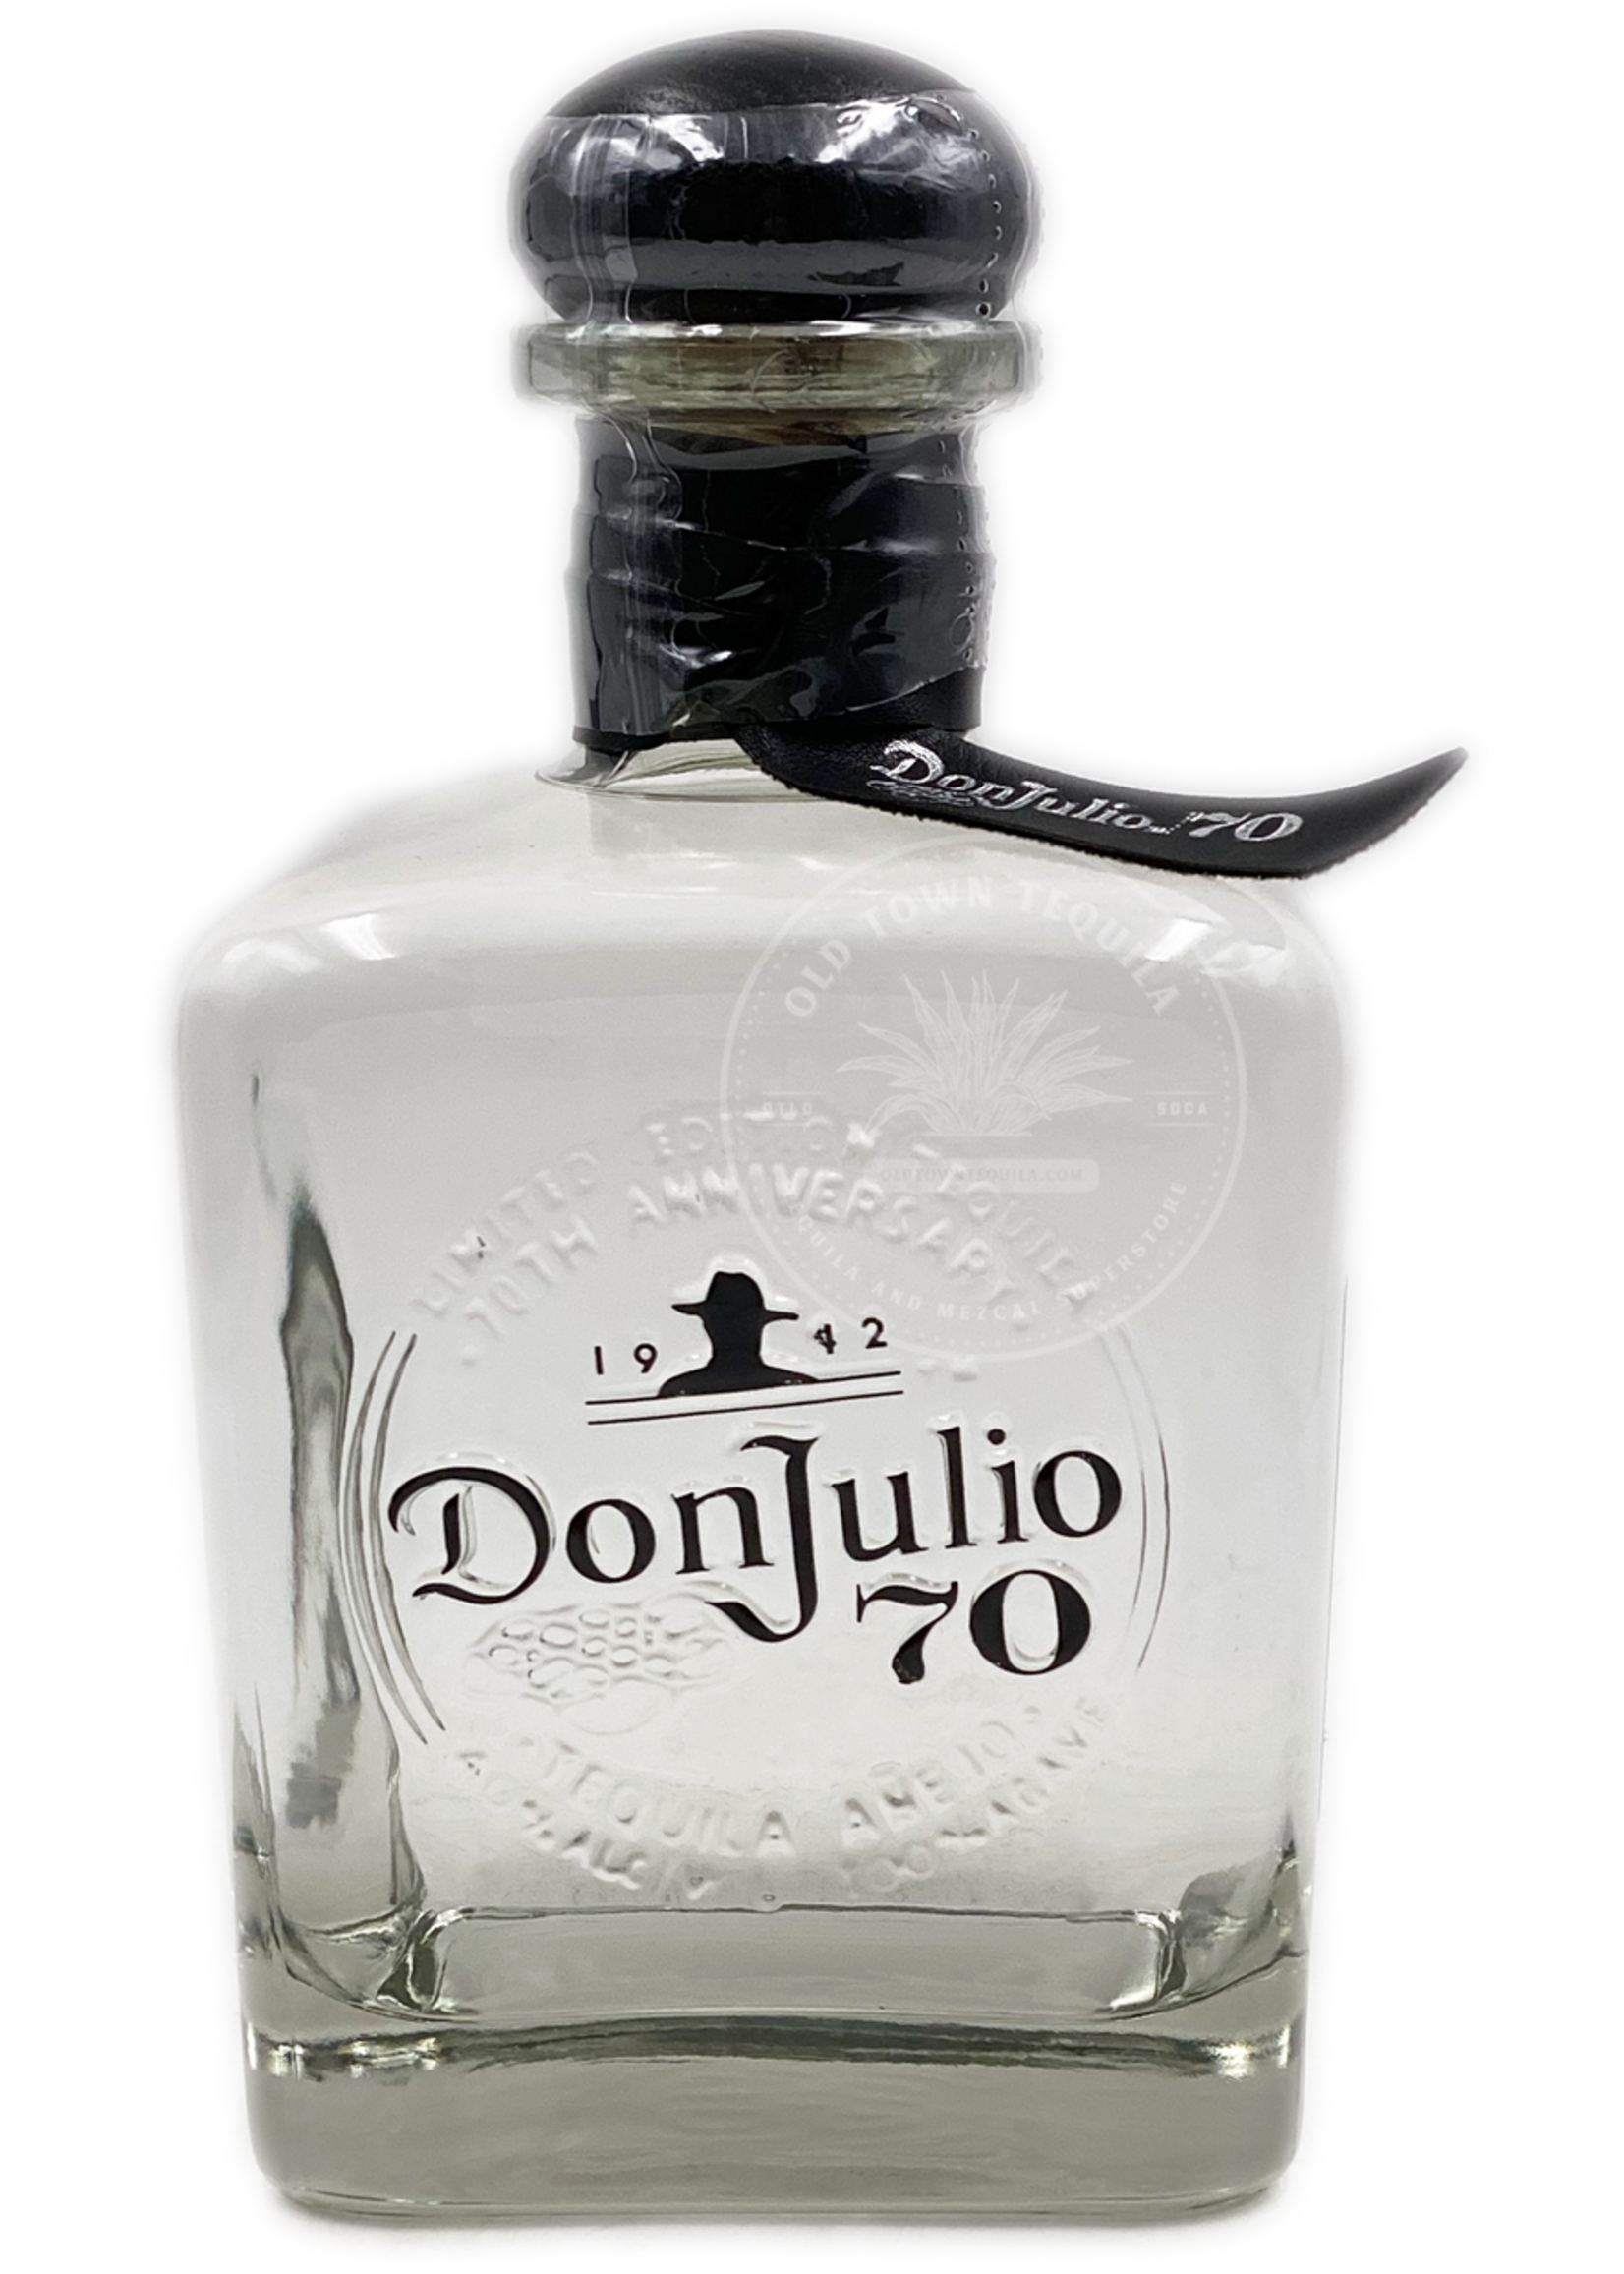 Don Julio Don Julio / Limited Edition 70th Anniversary Añejo Claro Tequila 100% De Agave / 750mL